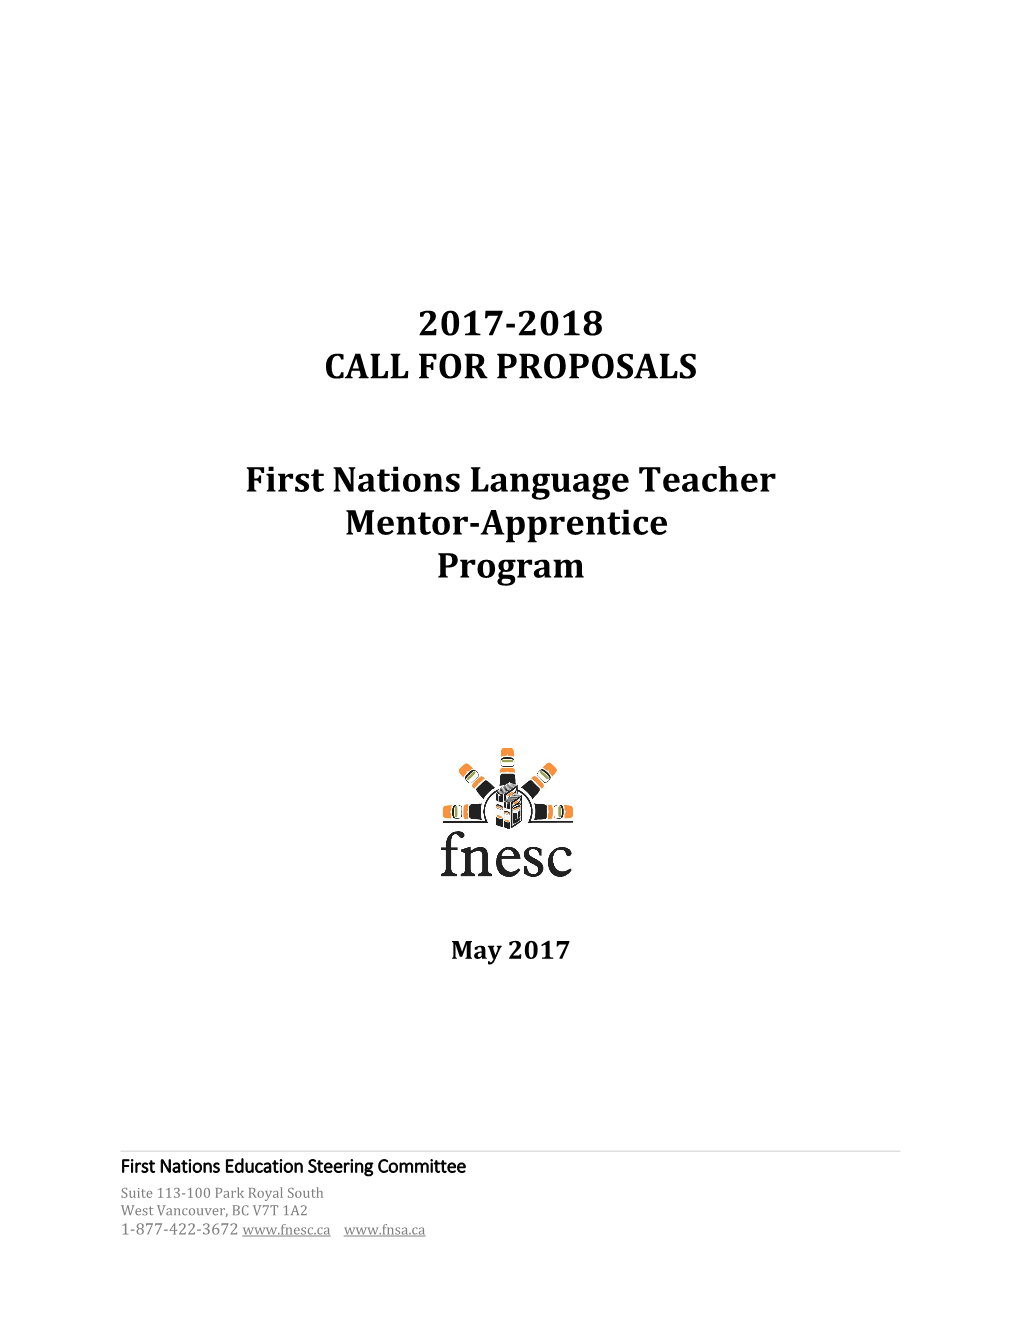 First Nations Language Teacher